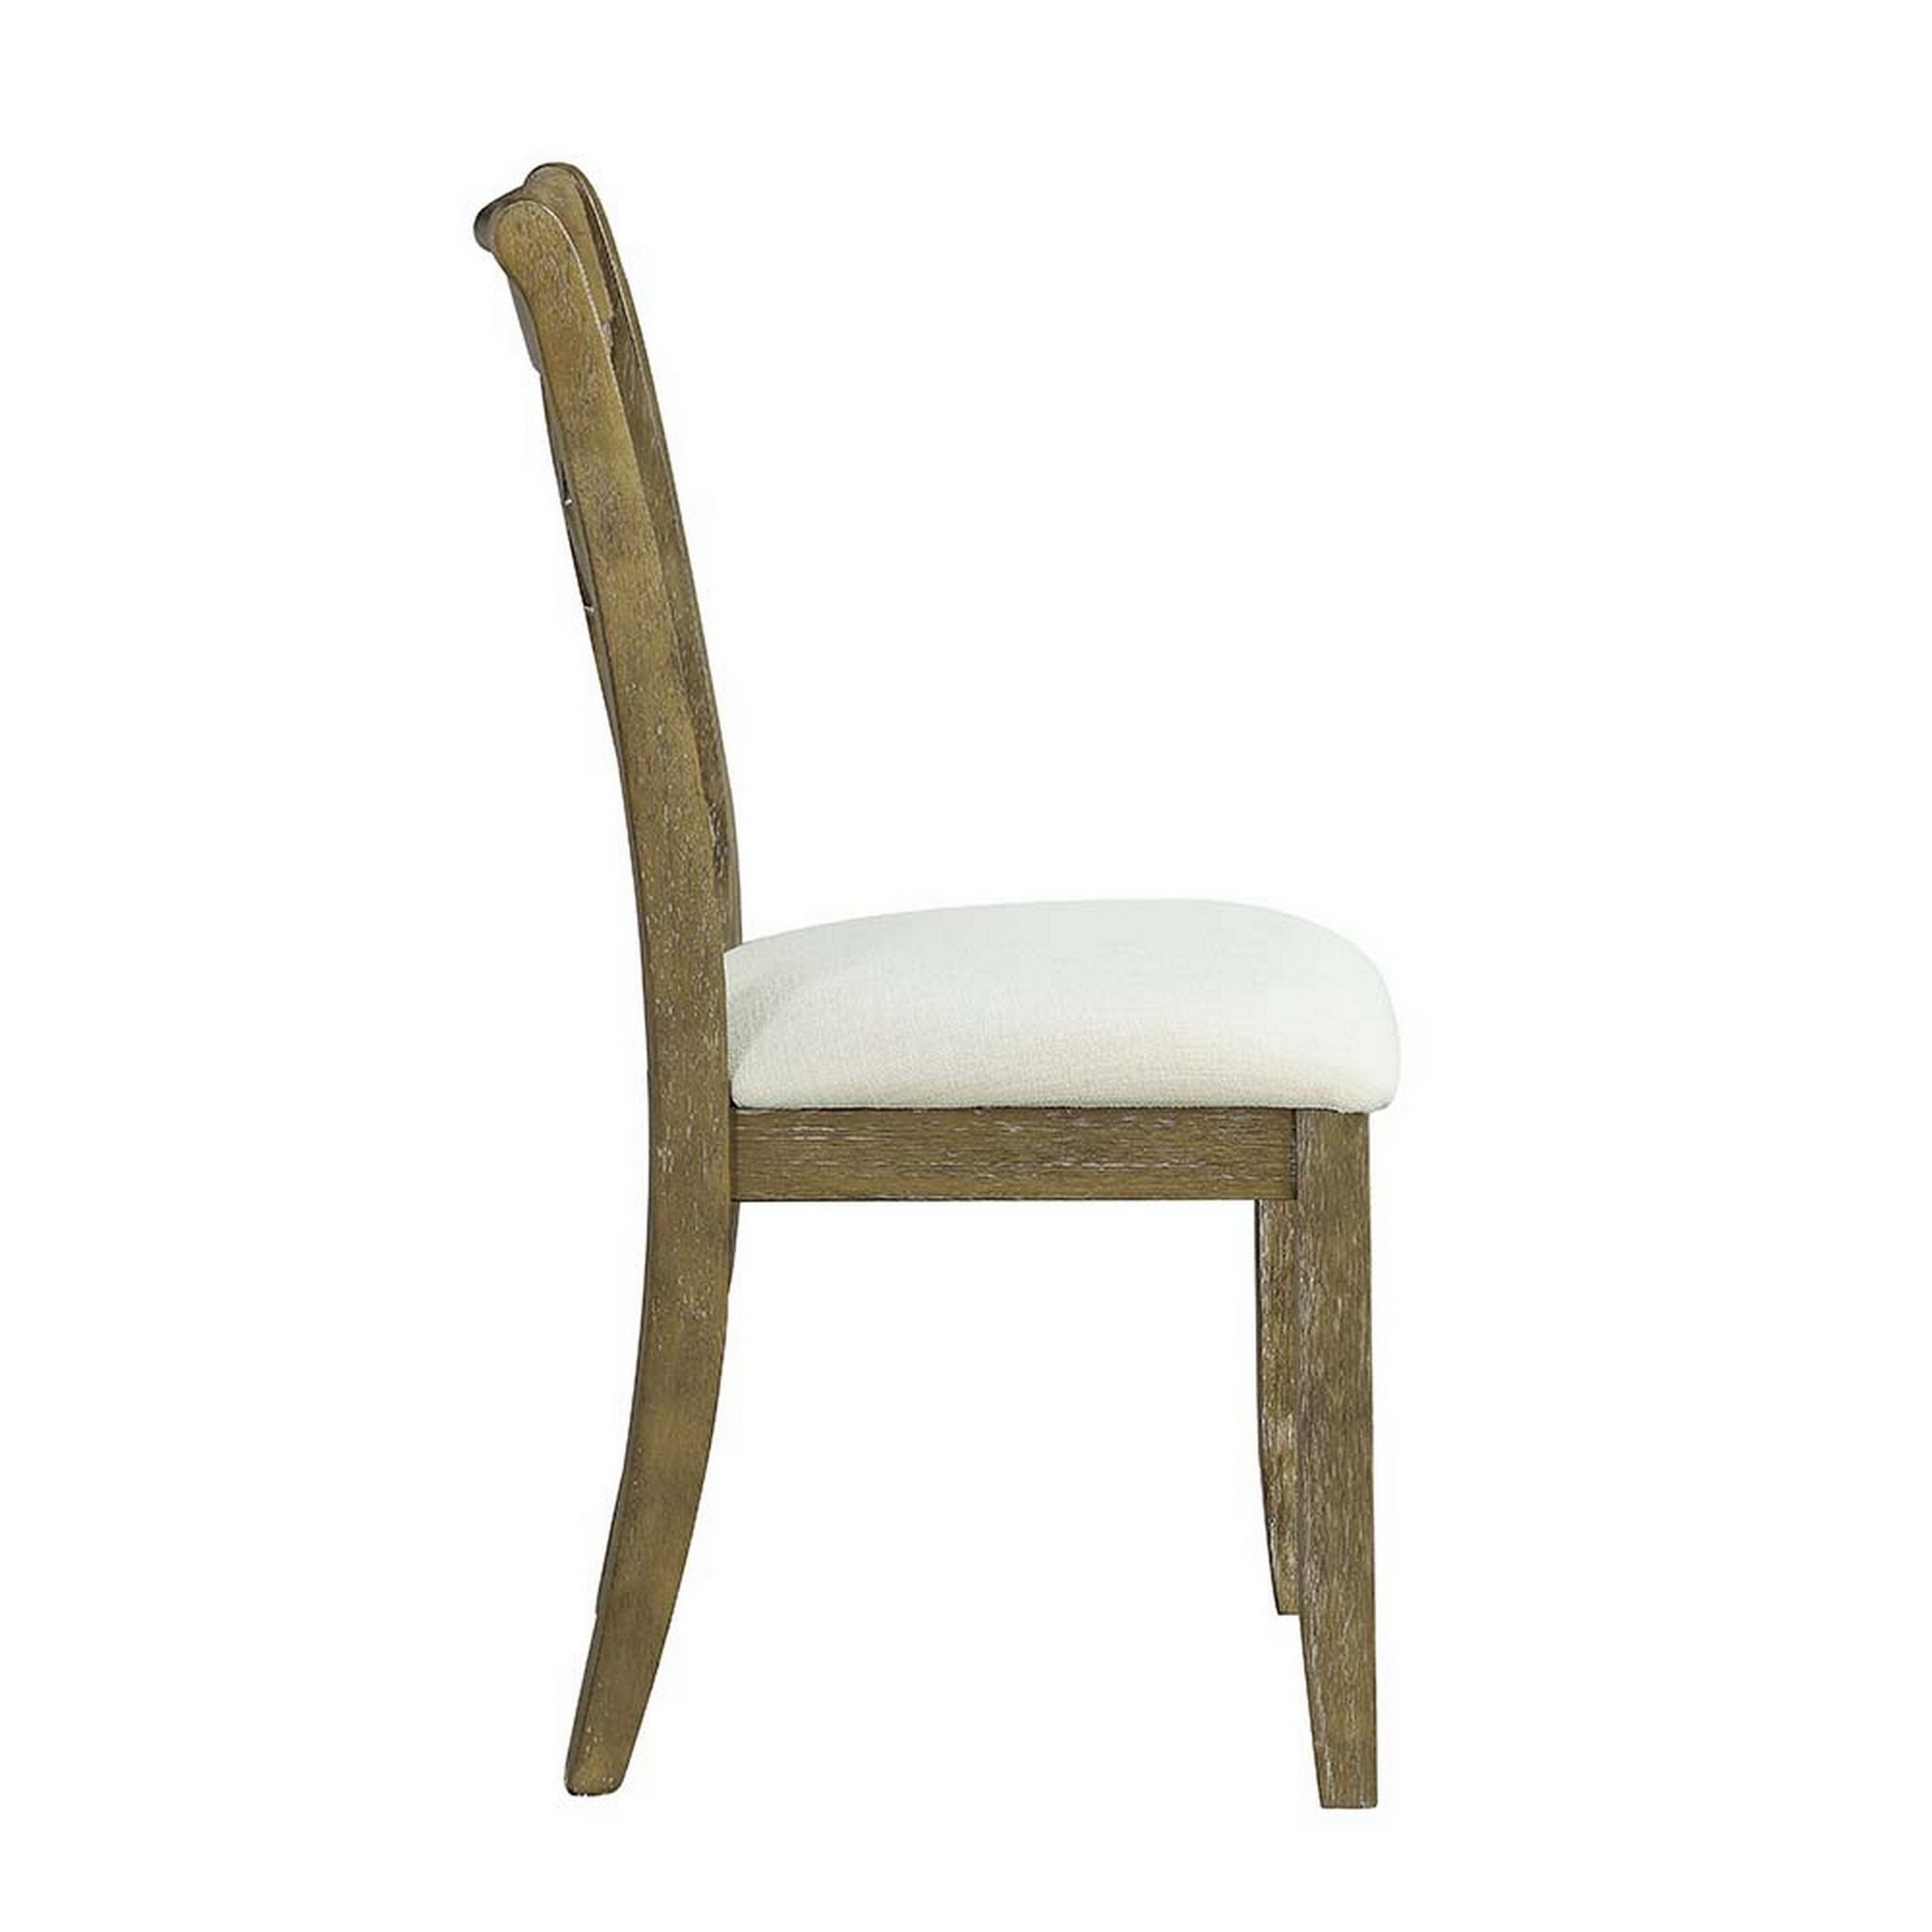 23 Inch Wood Dining Chair, Set Of 2, Cross Accent Backrest, Padded, Beige- Saltoro Sherpi